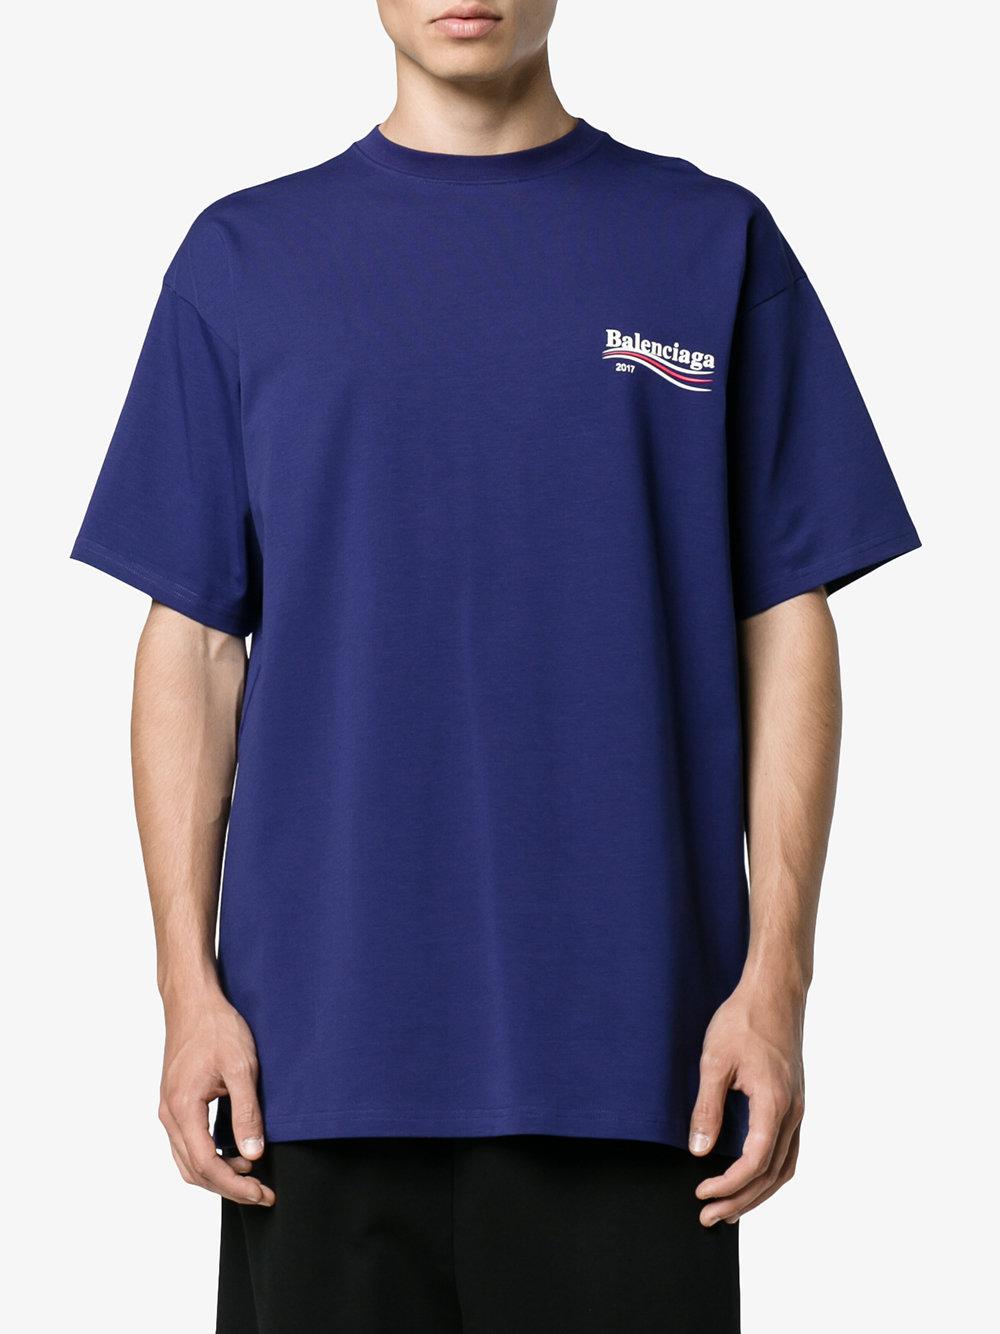 Balenciaga Oversized Logo Print Cotton T Shirt In Blue For Men Lyst